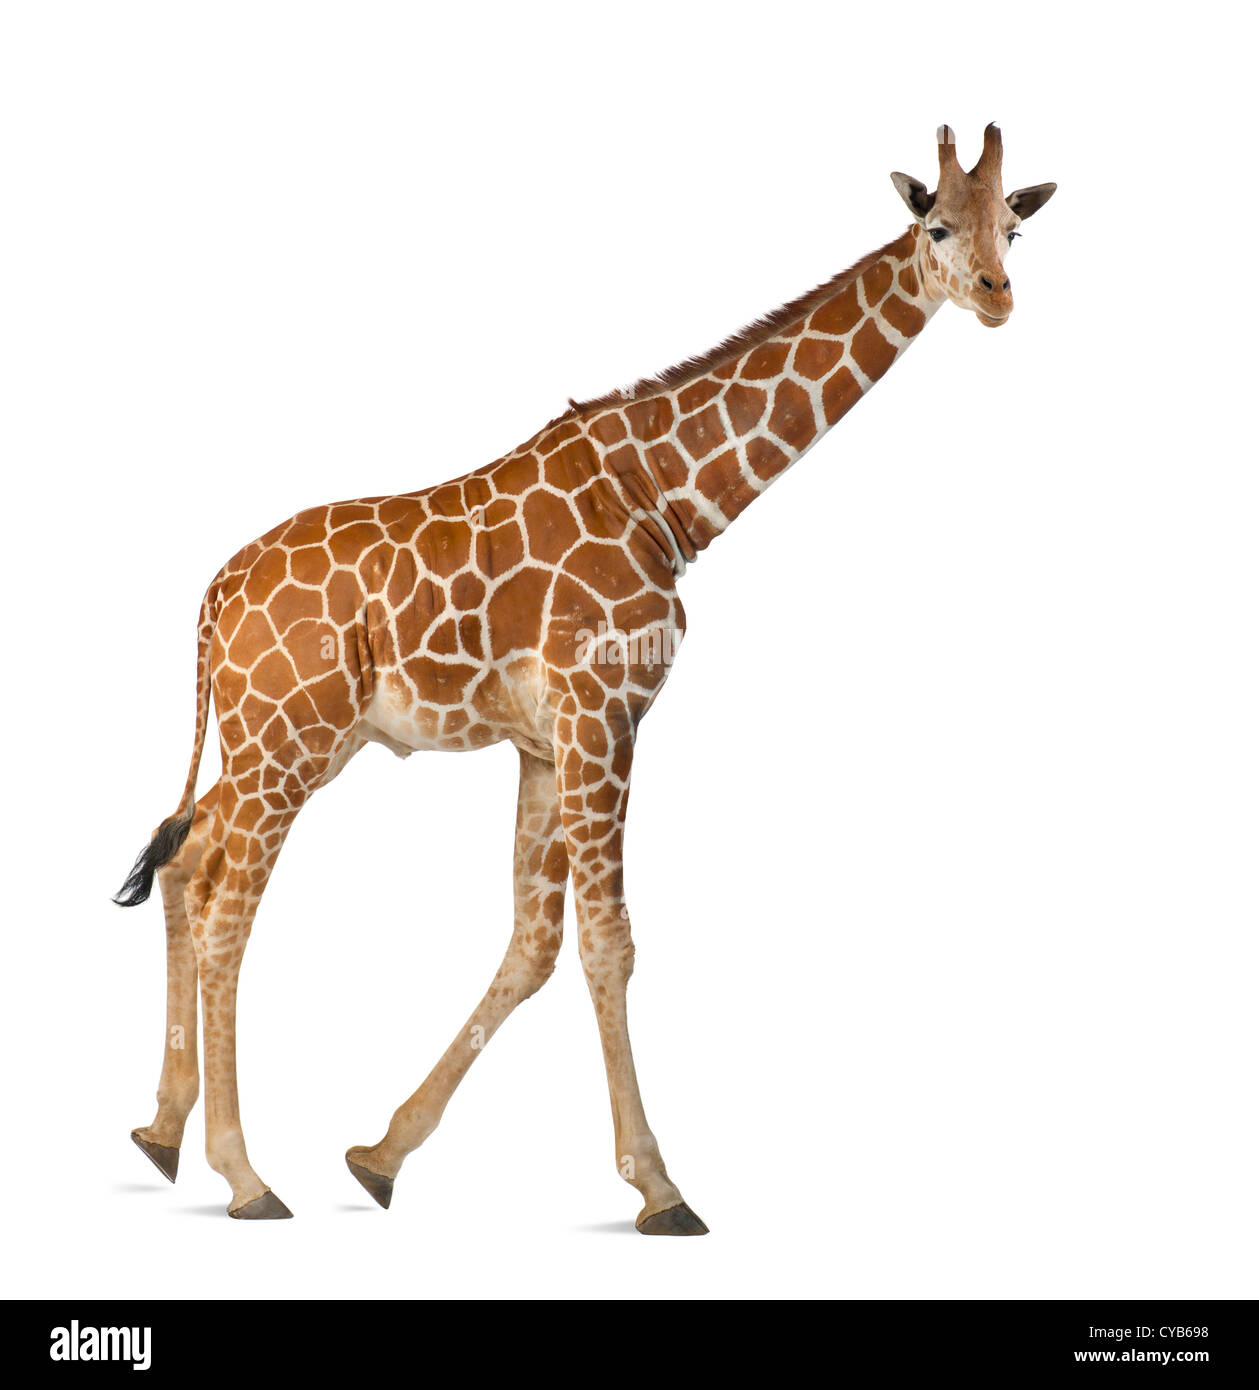 Girafe somaliens, connu sous le nom de giraffe réticulée, Giraffa camelopardalis reticulata, 2,5 ans, contre fond blanc Banque D'Images